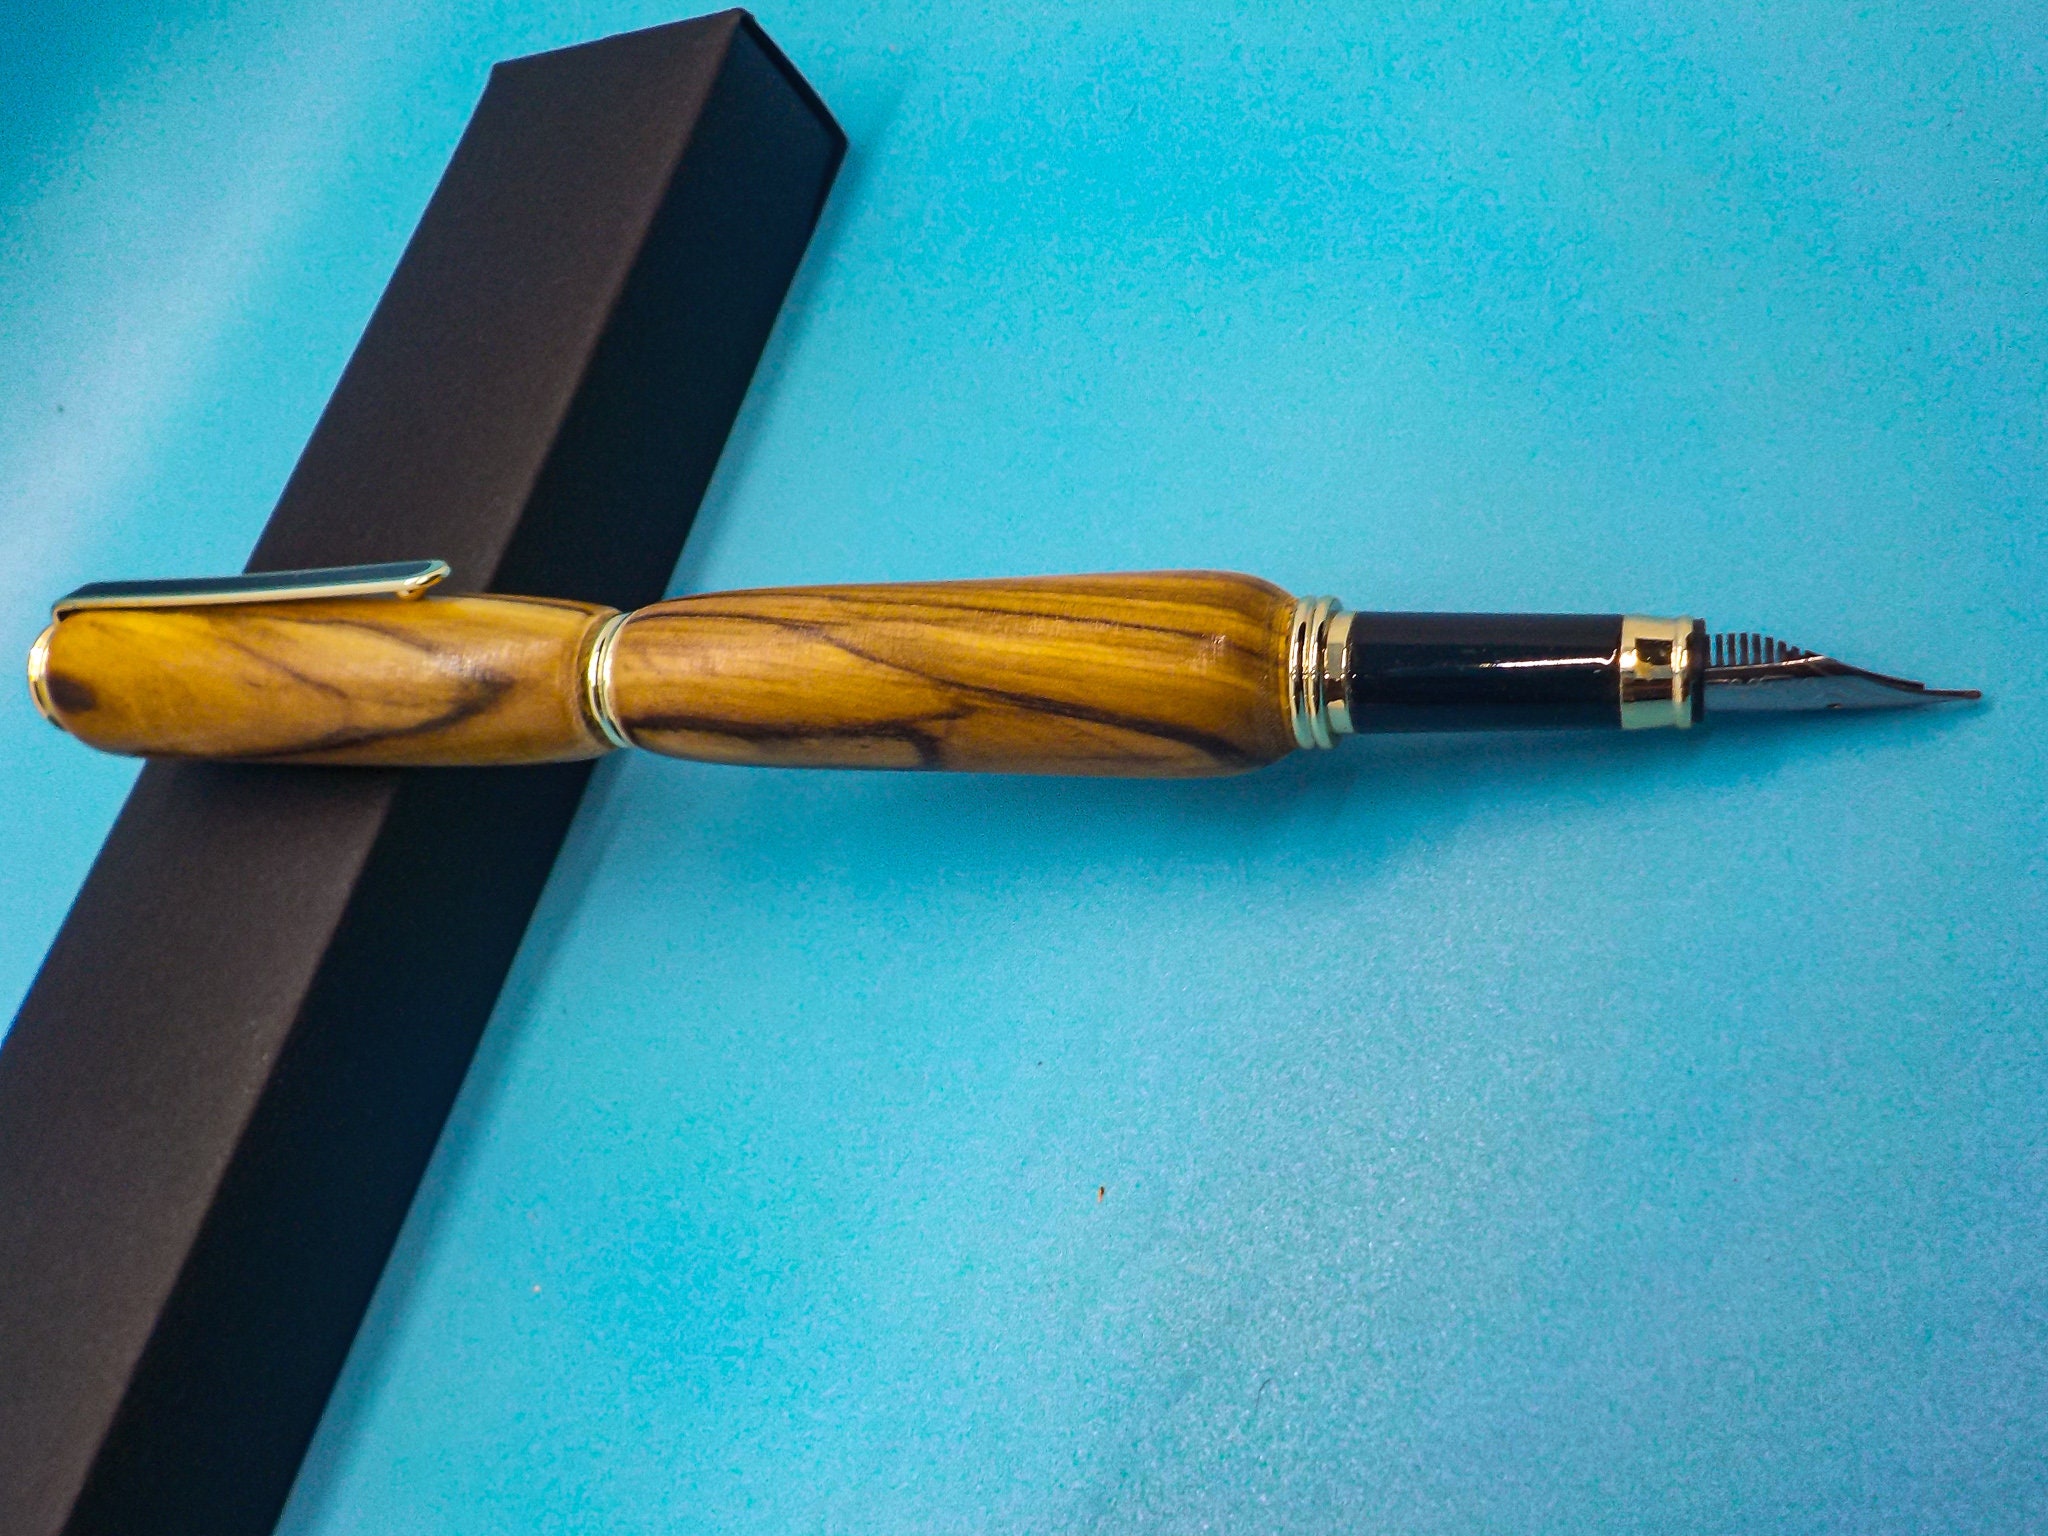 Olivewood Classic Elite Fountain Pen For Sale – Lanier pens